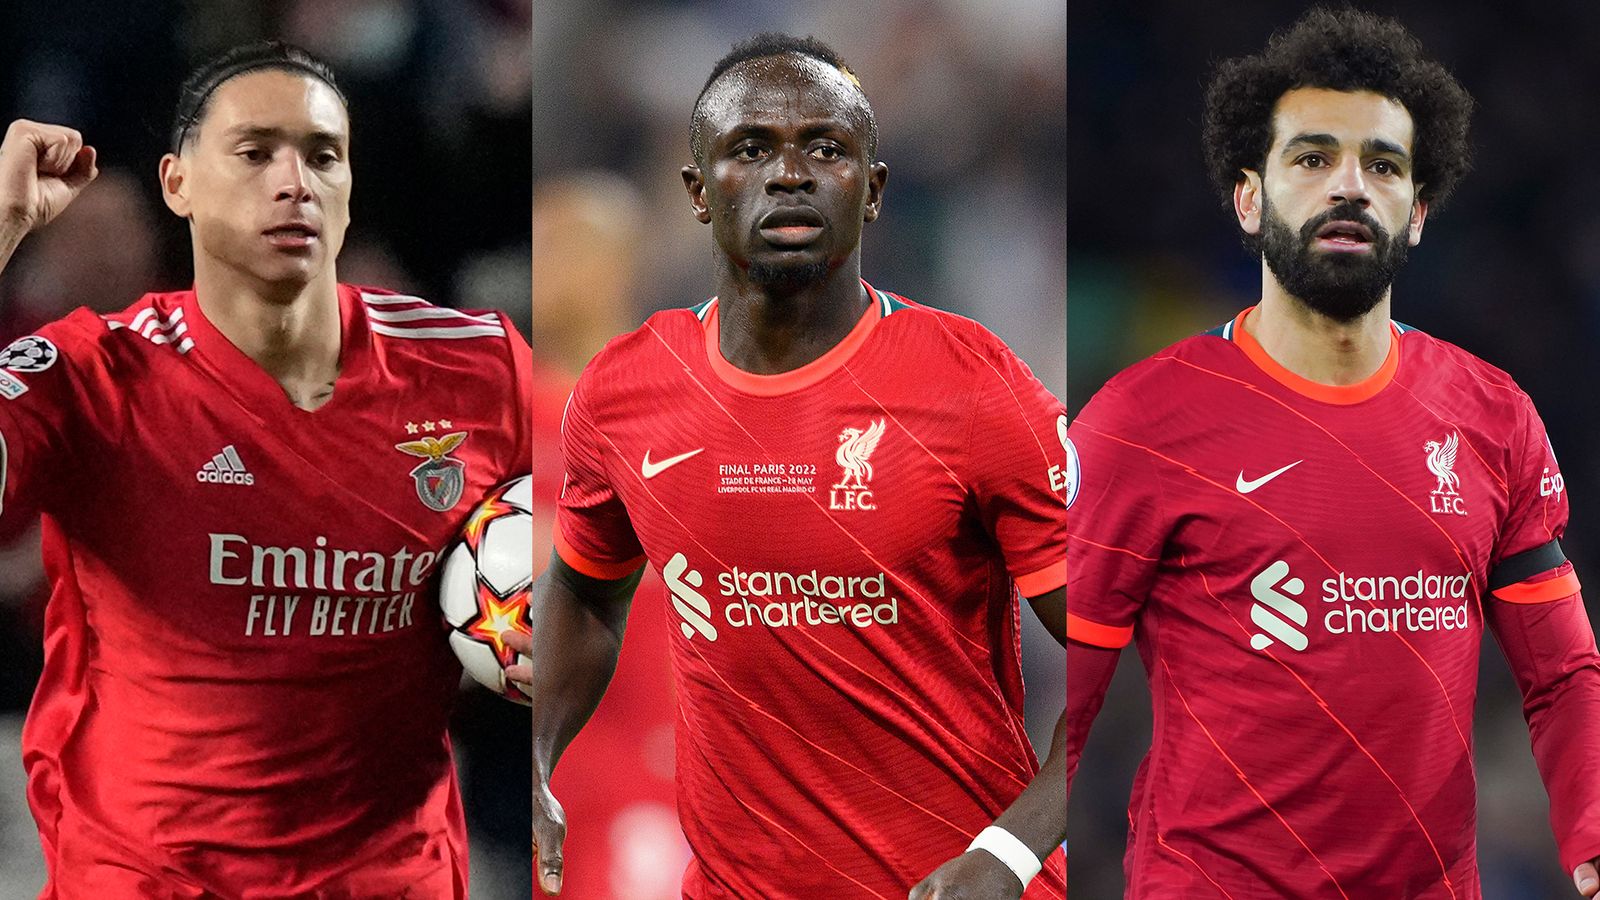 Darwin Nunez, Sadio Mane and Mo Salah: Transfer Talk podcast assesses Liverpool’s summer business